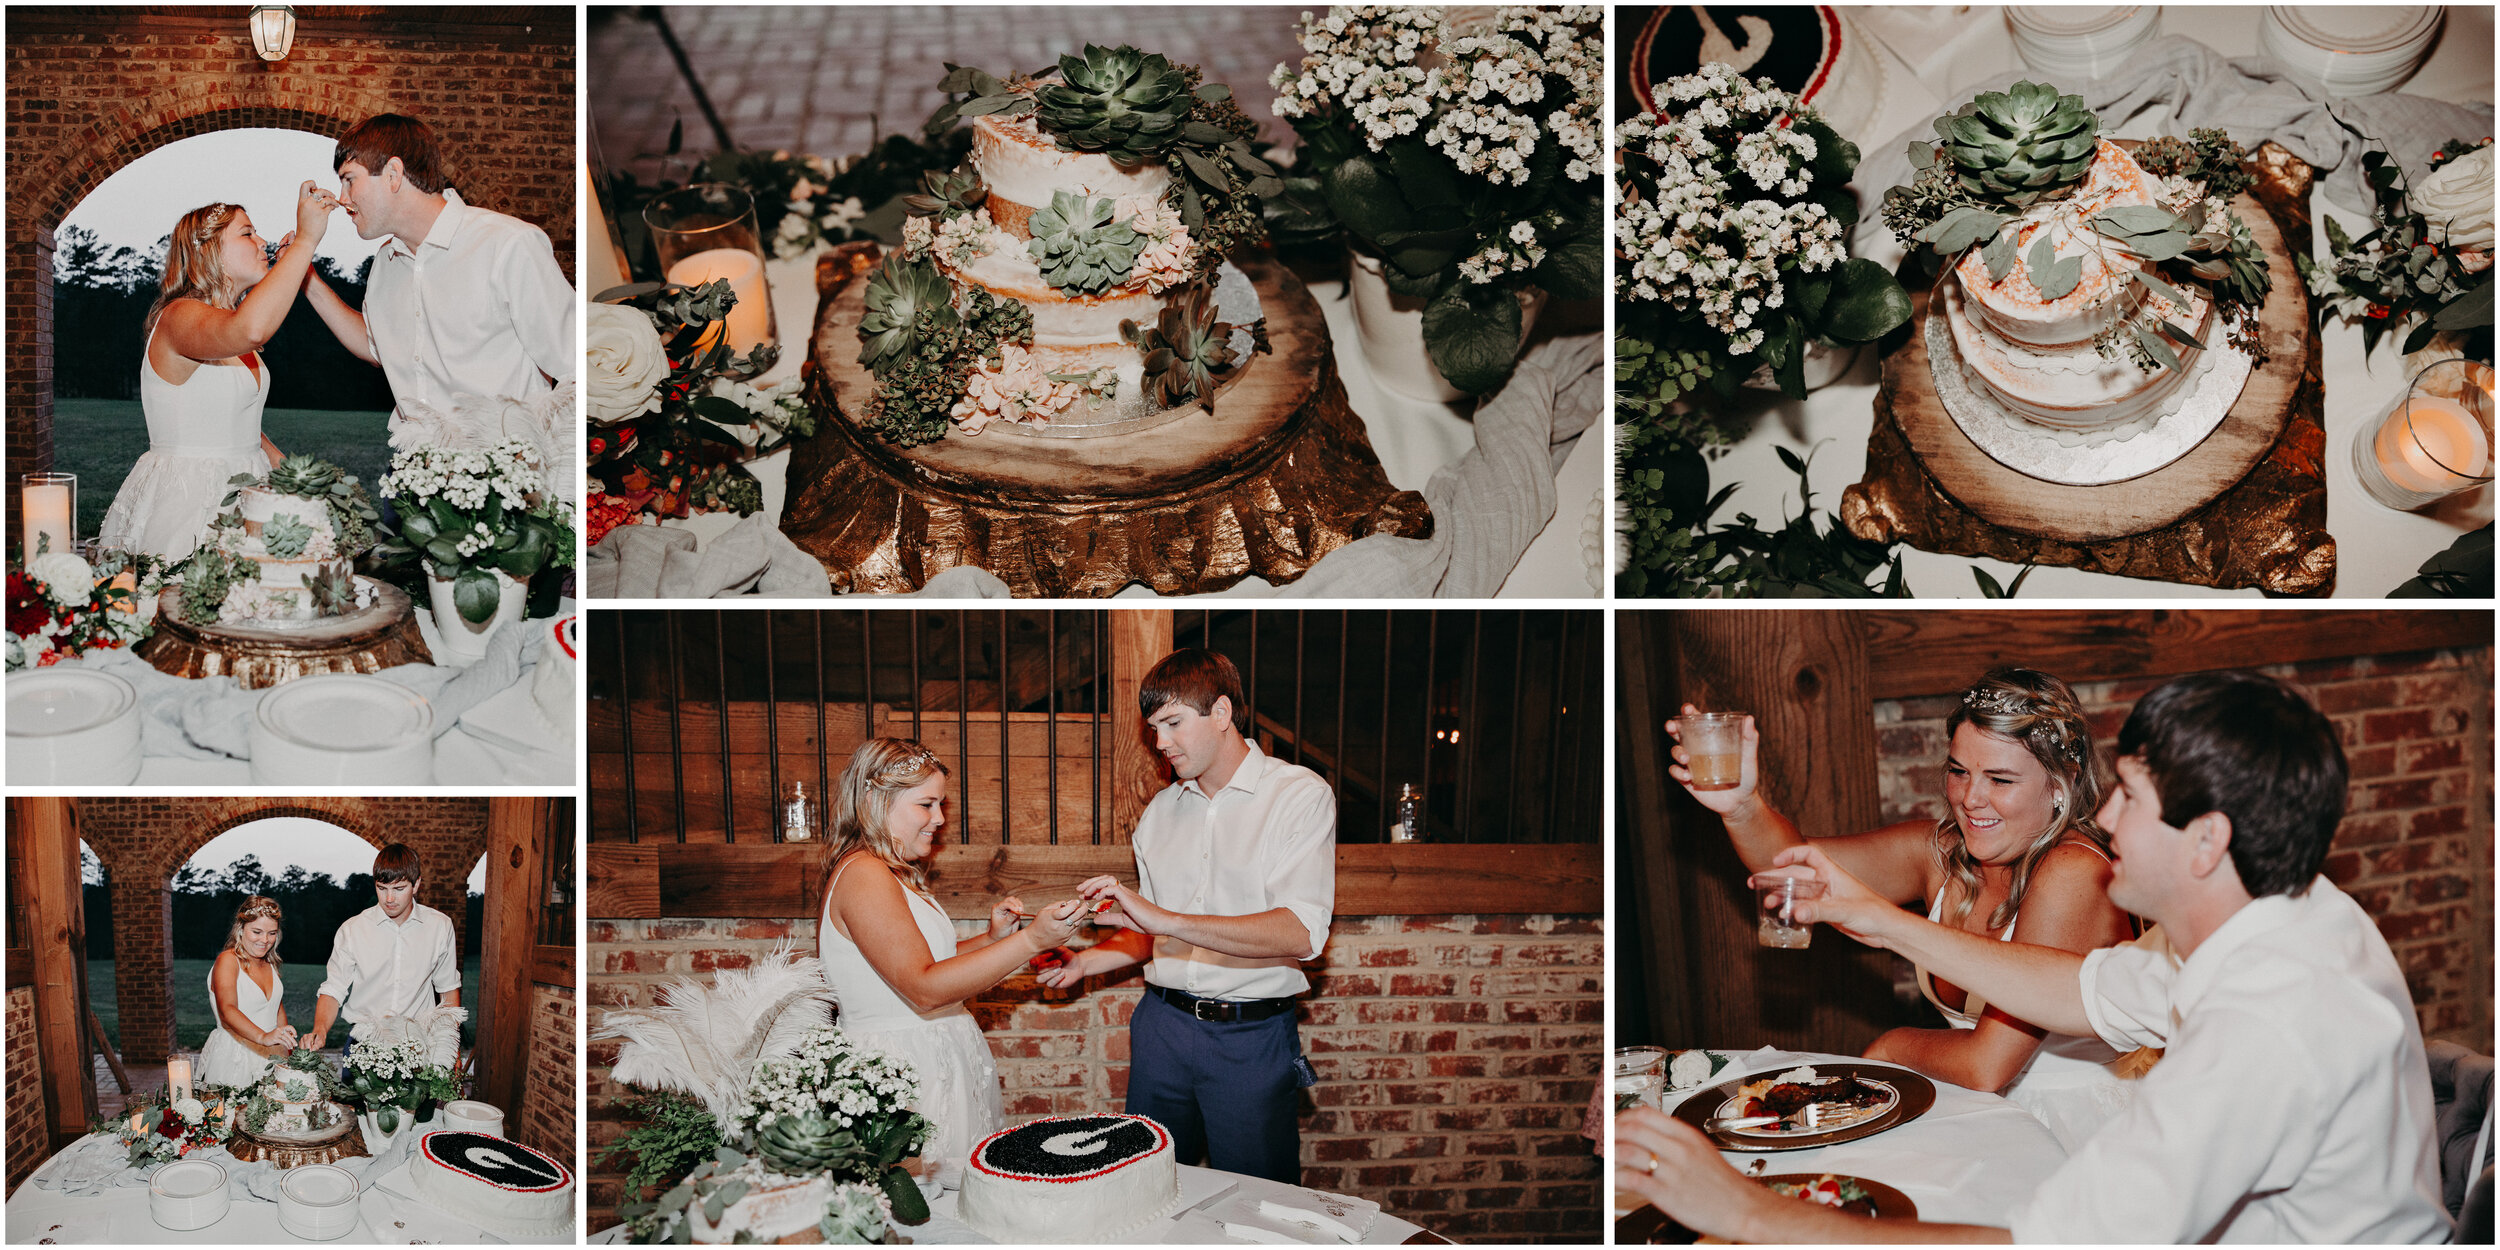 Atlanta_Wedding Day || The Farm at Rome-Ga, Aline Marin Photography96.jpg